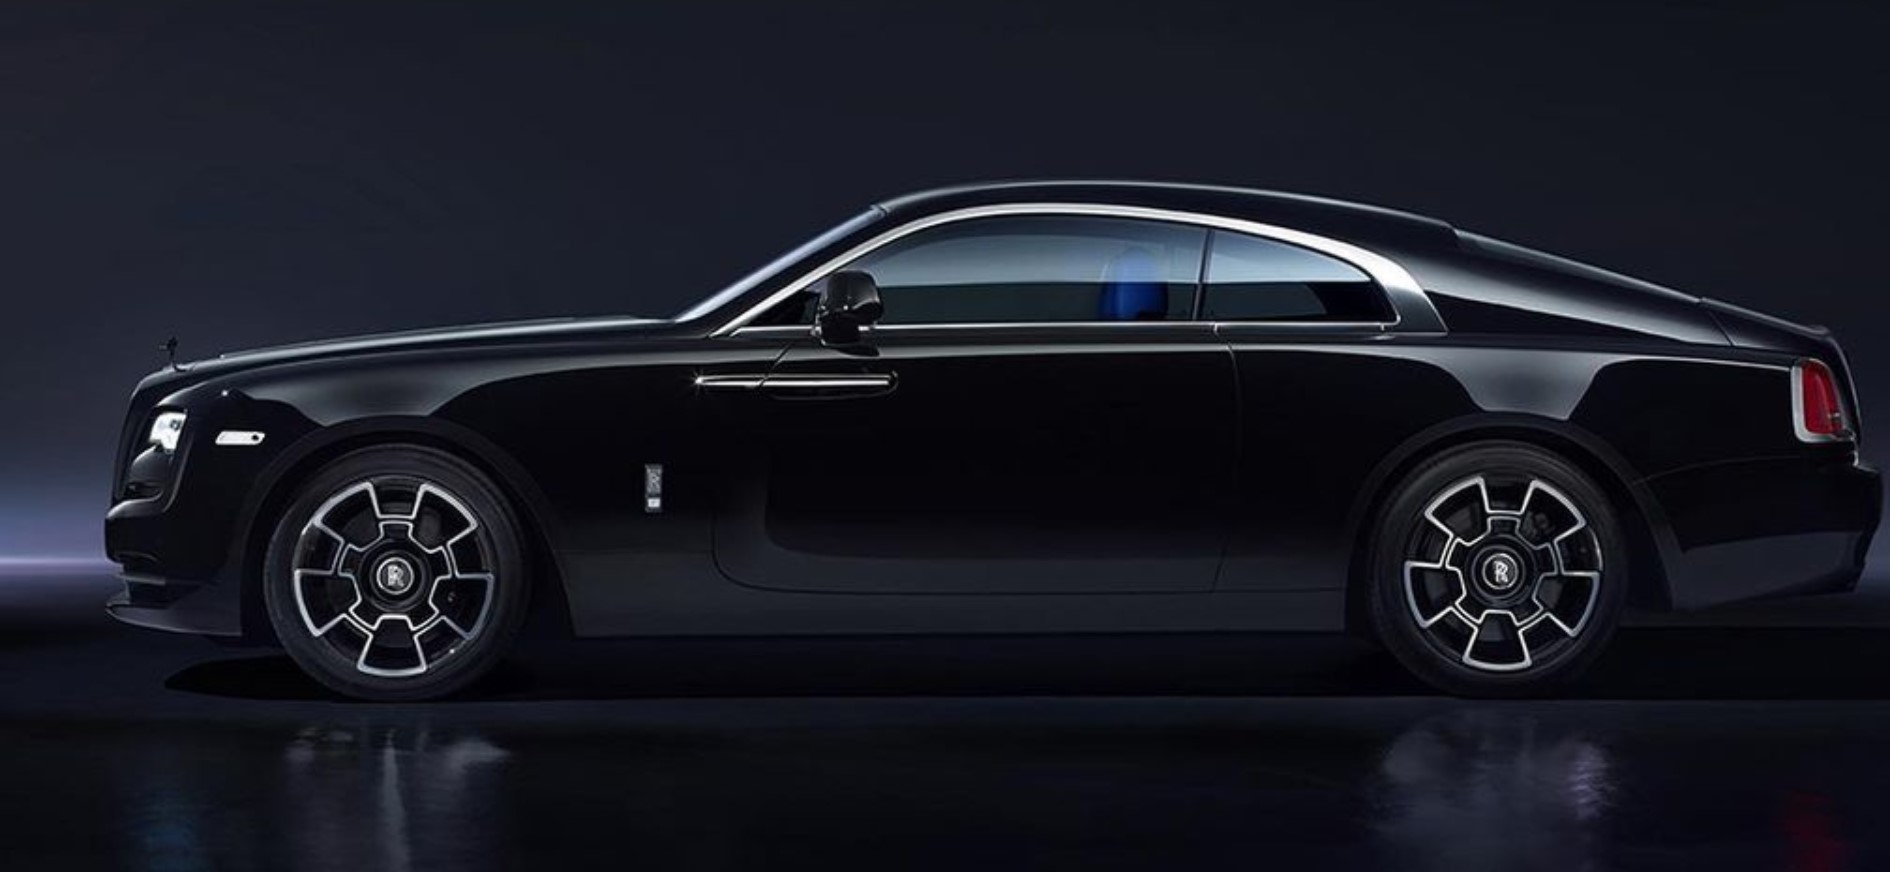 Бренд Rolls-Royce показал тизер автомобиля Ghost Black Badge